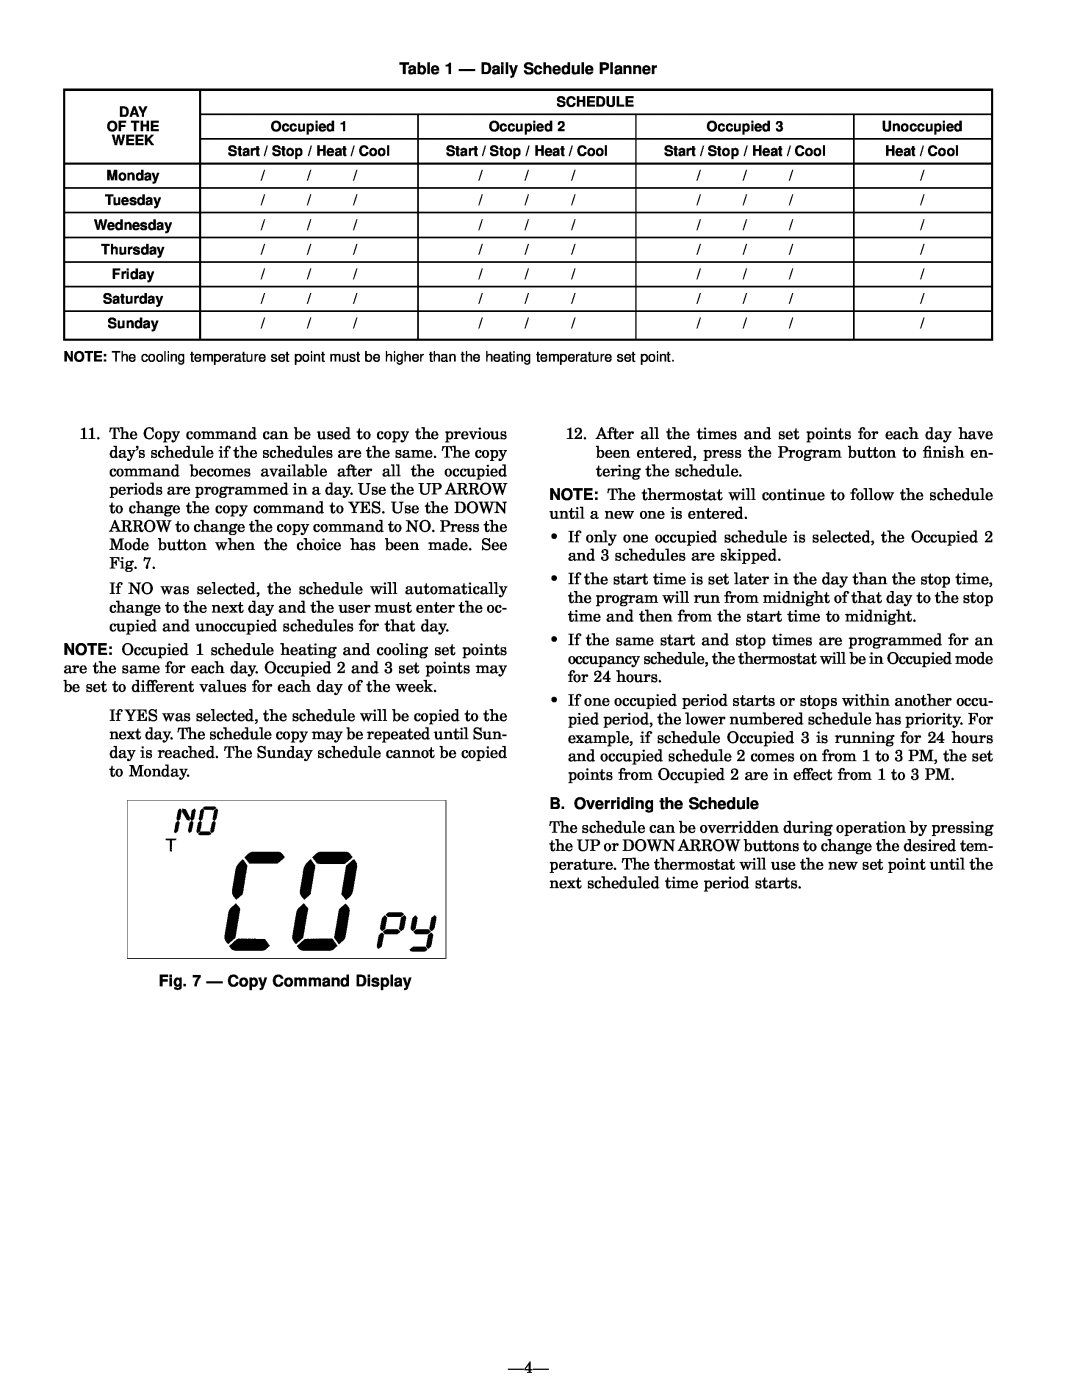 Bryant P/N TSTATBBP220-01 manual Ð Daily Schedule Planner, B. Overriding the Schedule, Ð Copy Command Display 